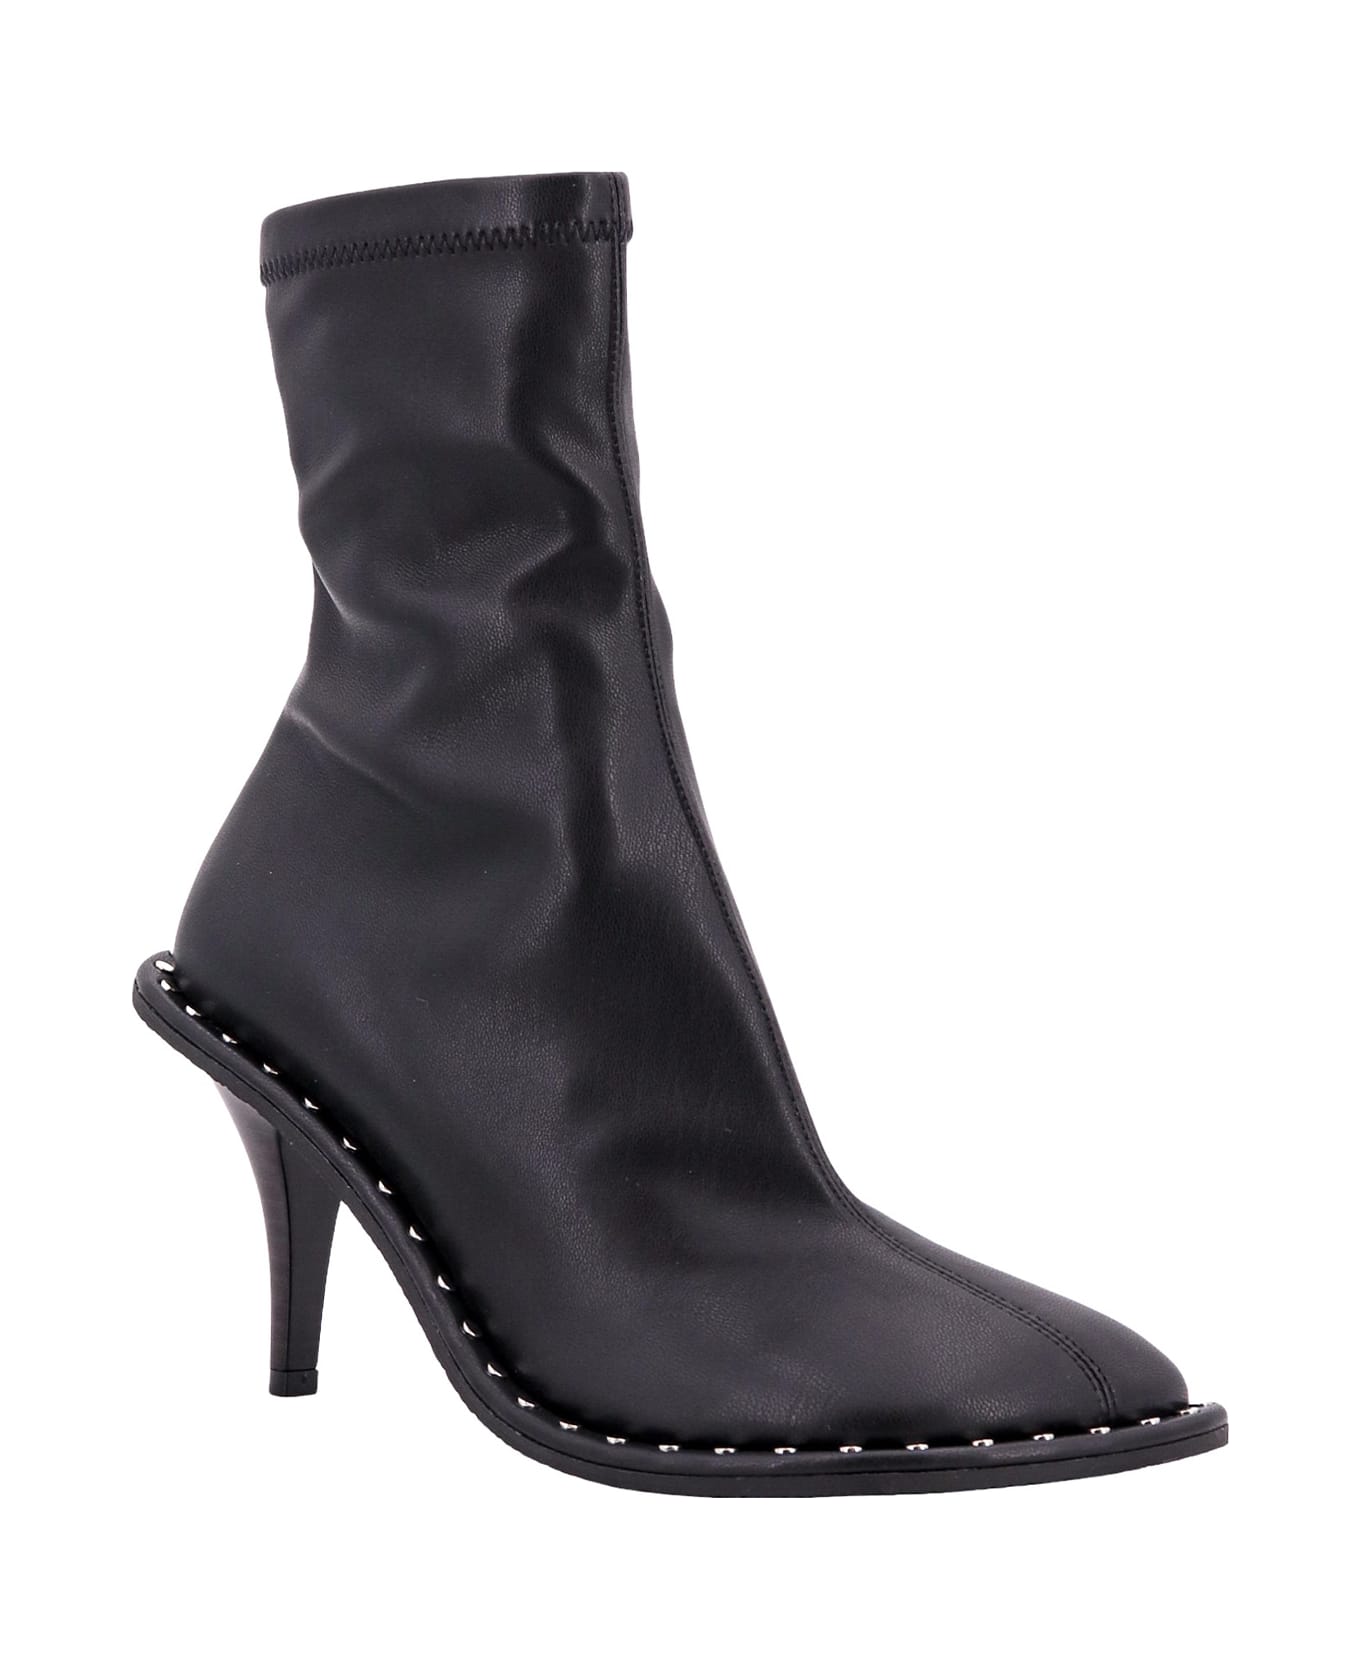 Stella McCartney Ryder Ankle Boots - Black